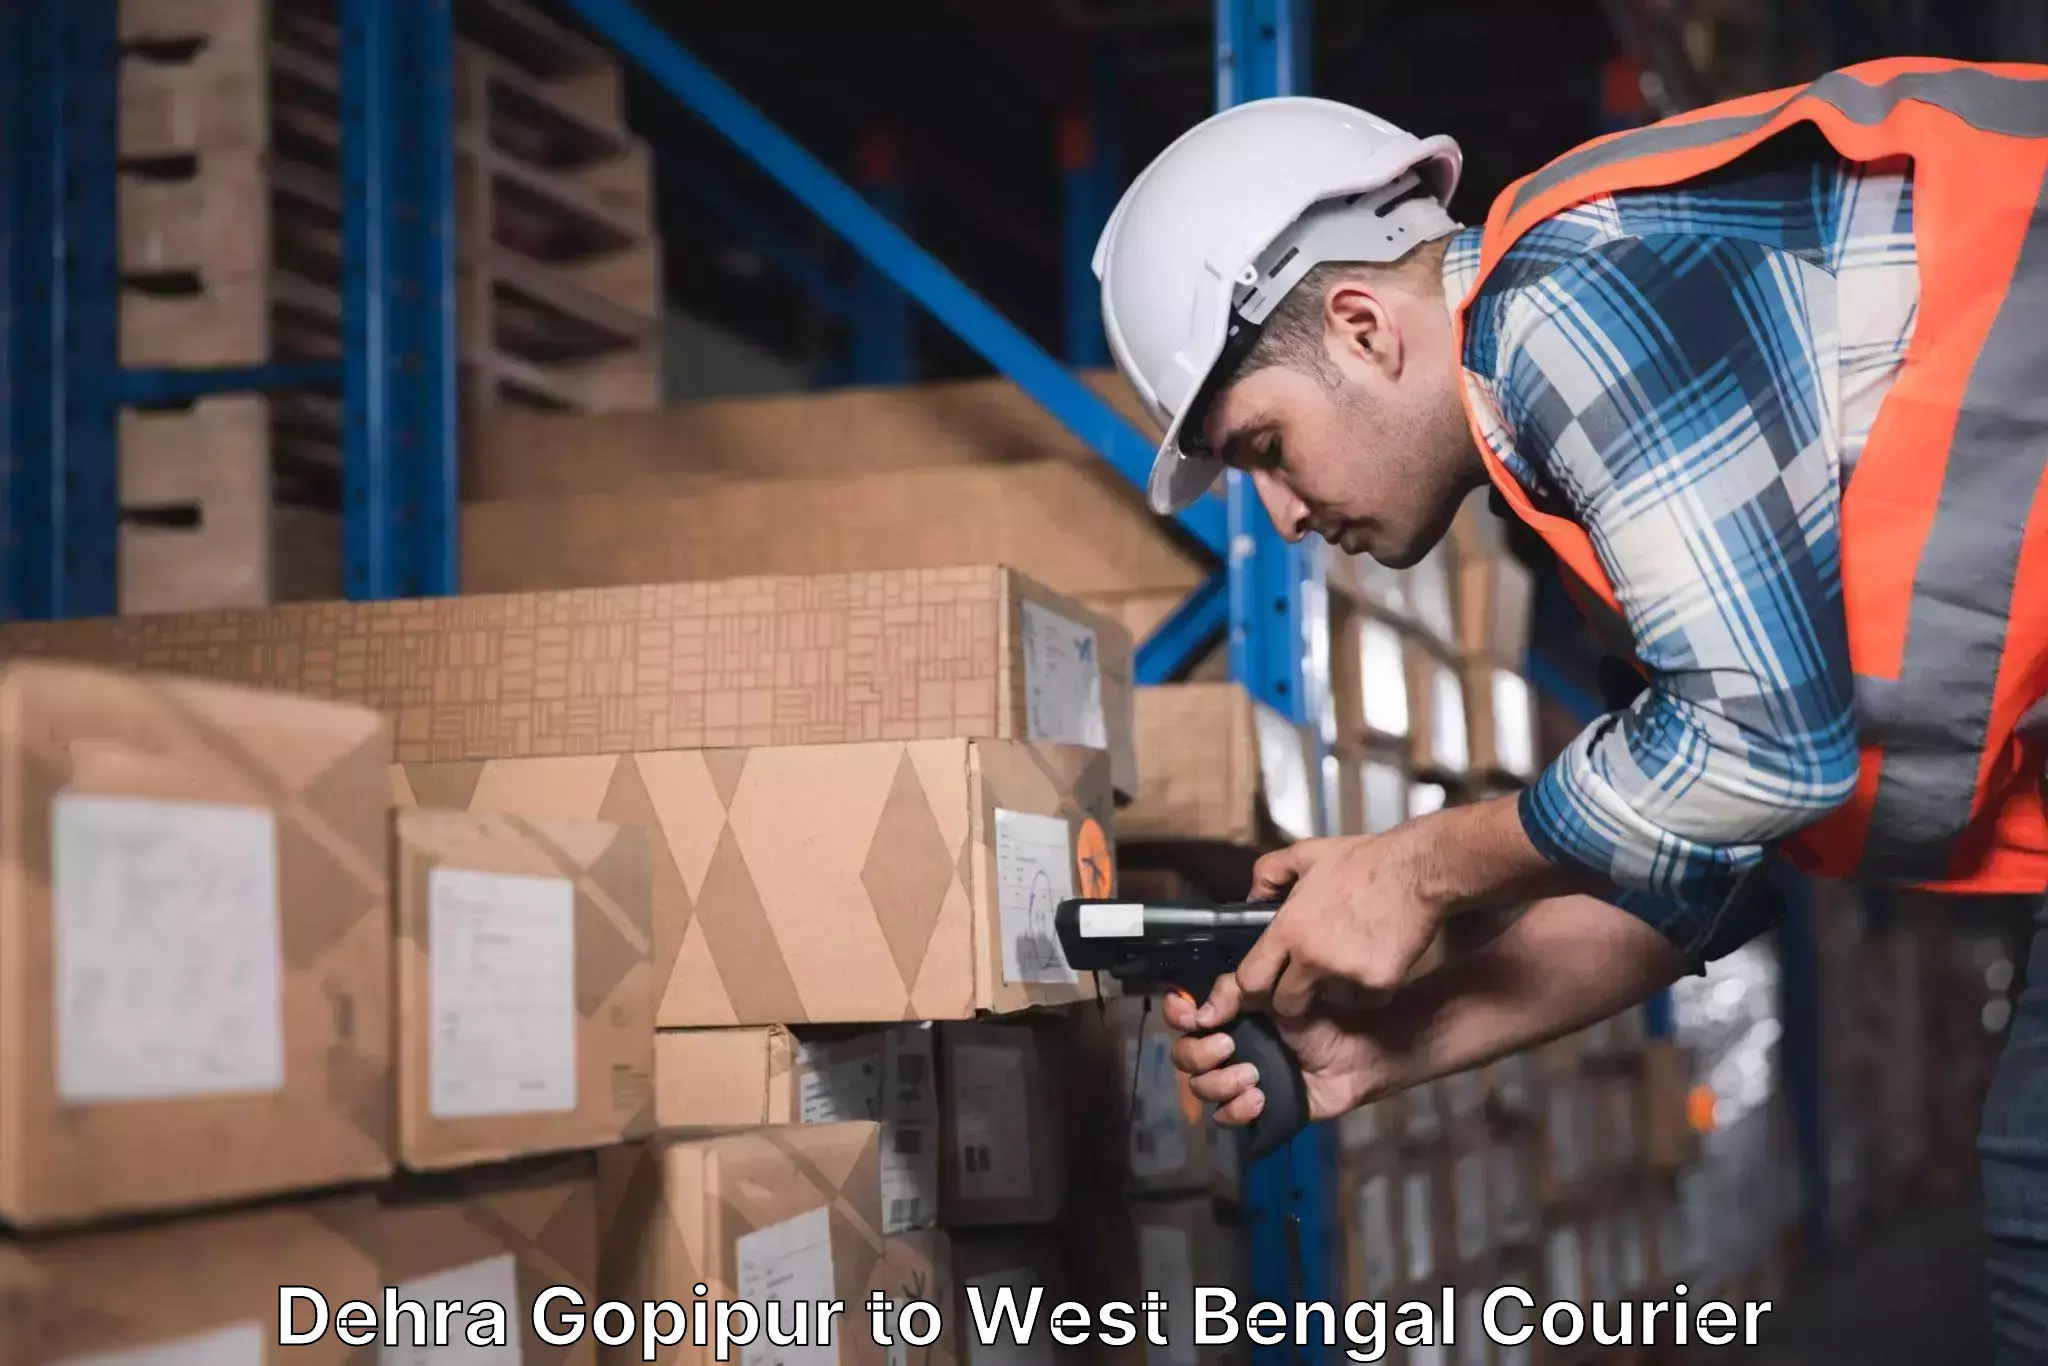 Professional courier handling Dehra Gopipur to Kolkata Port